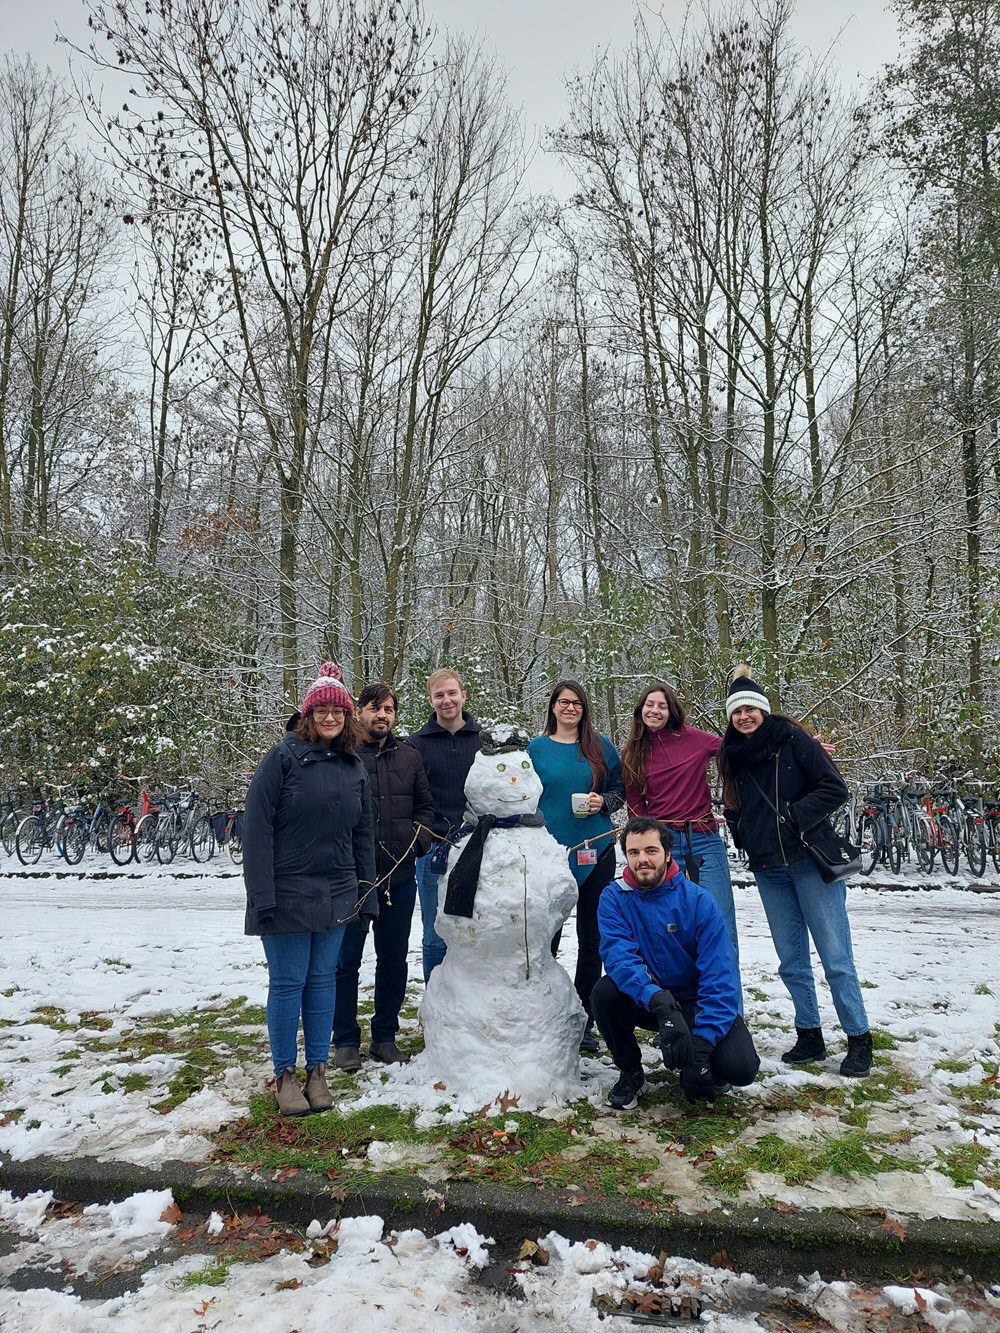 The largest snowman at Zernike campus! (felt to right): Giovanna, Waseem, Douwe, Antonija, Stella, Crystal & Ioannis (front)